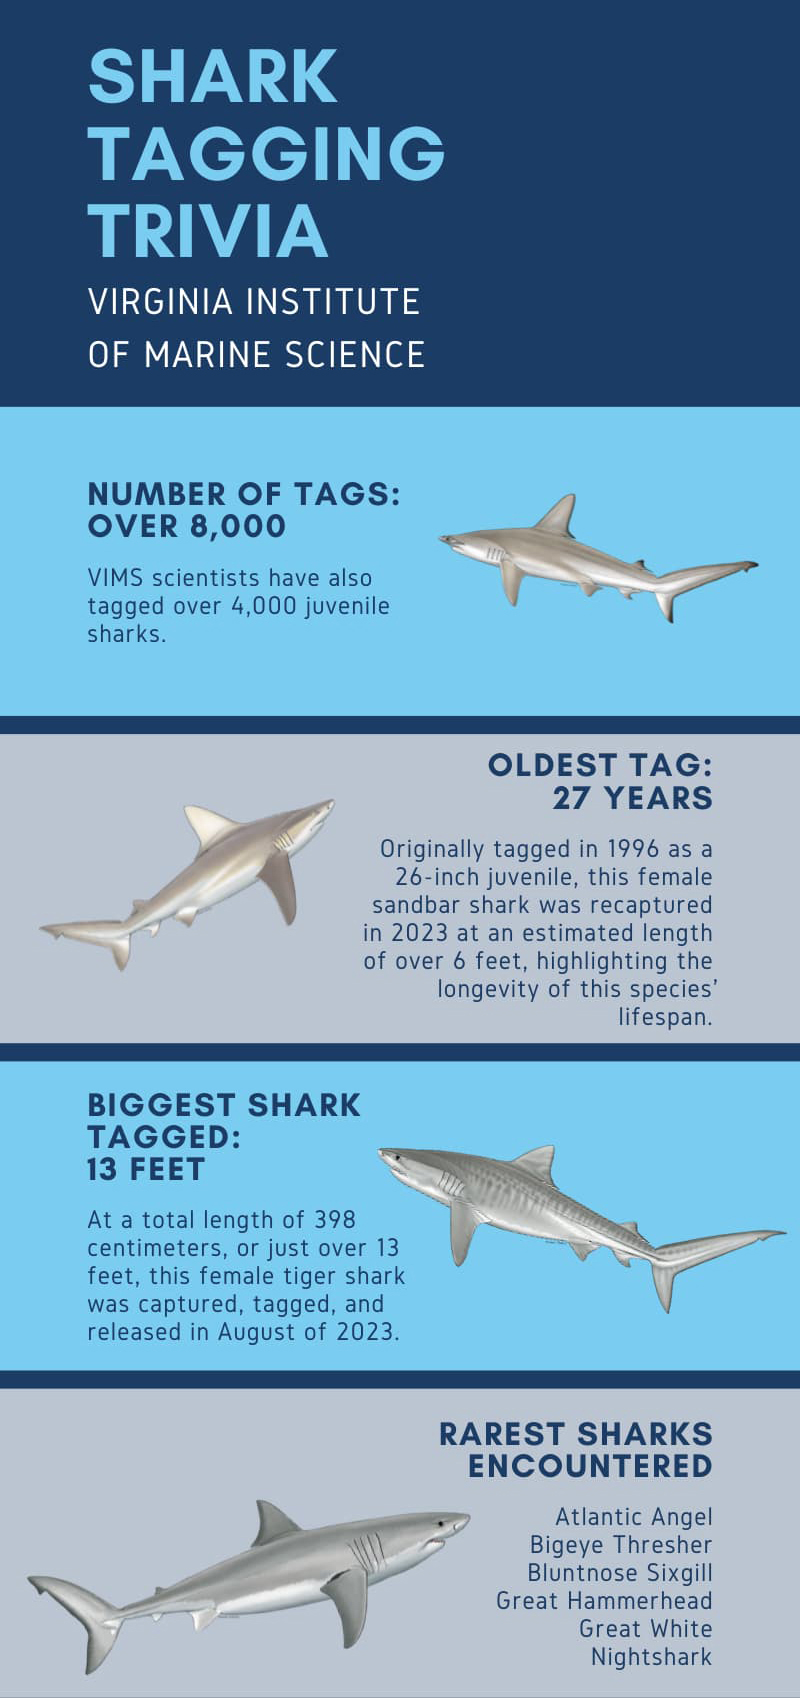 VIMS Shark Tagging Trivia